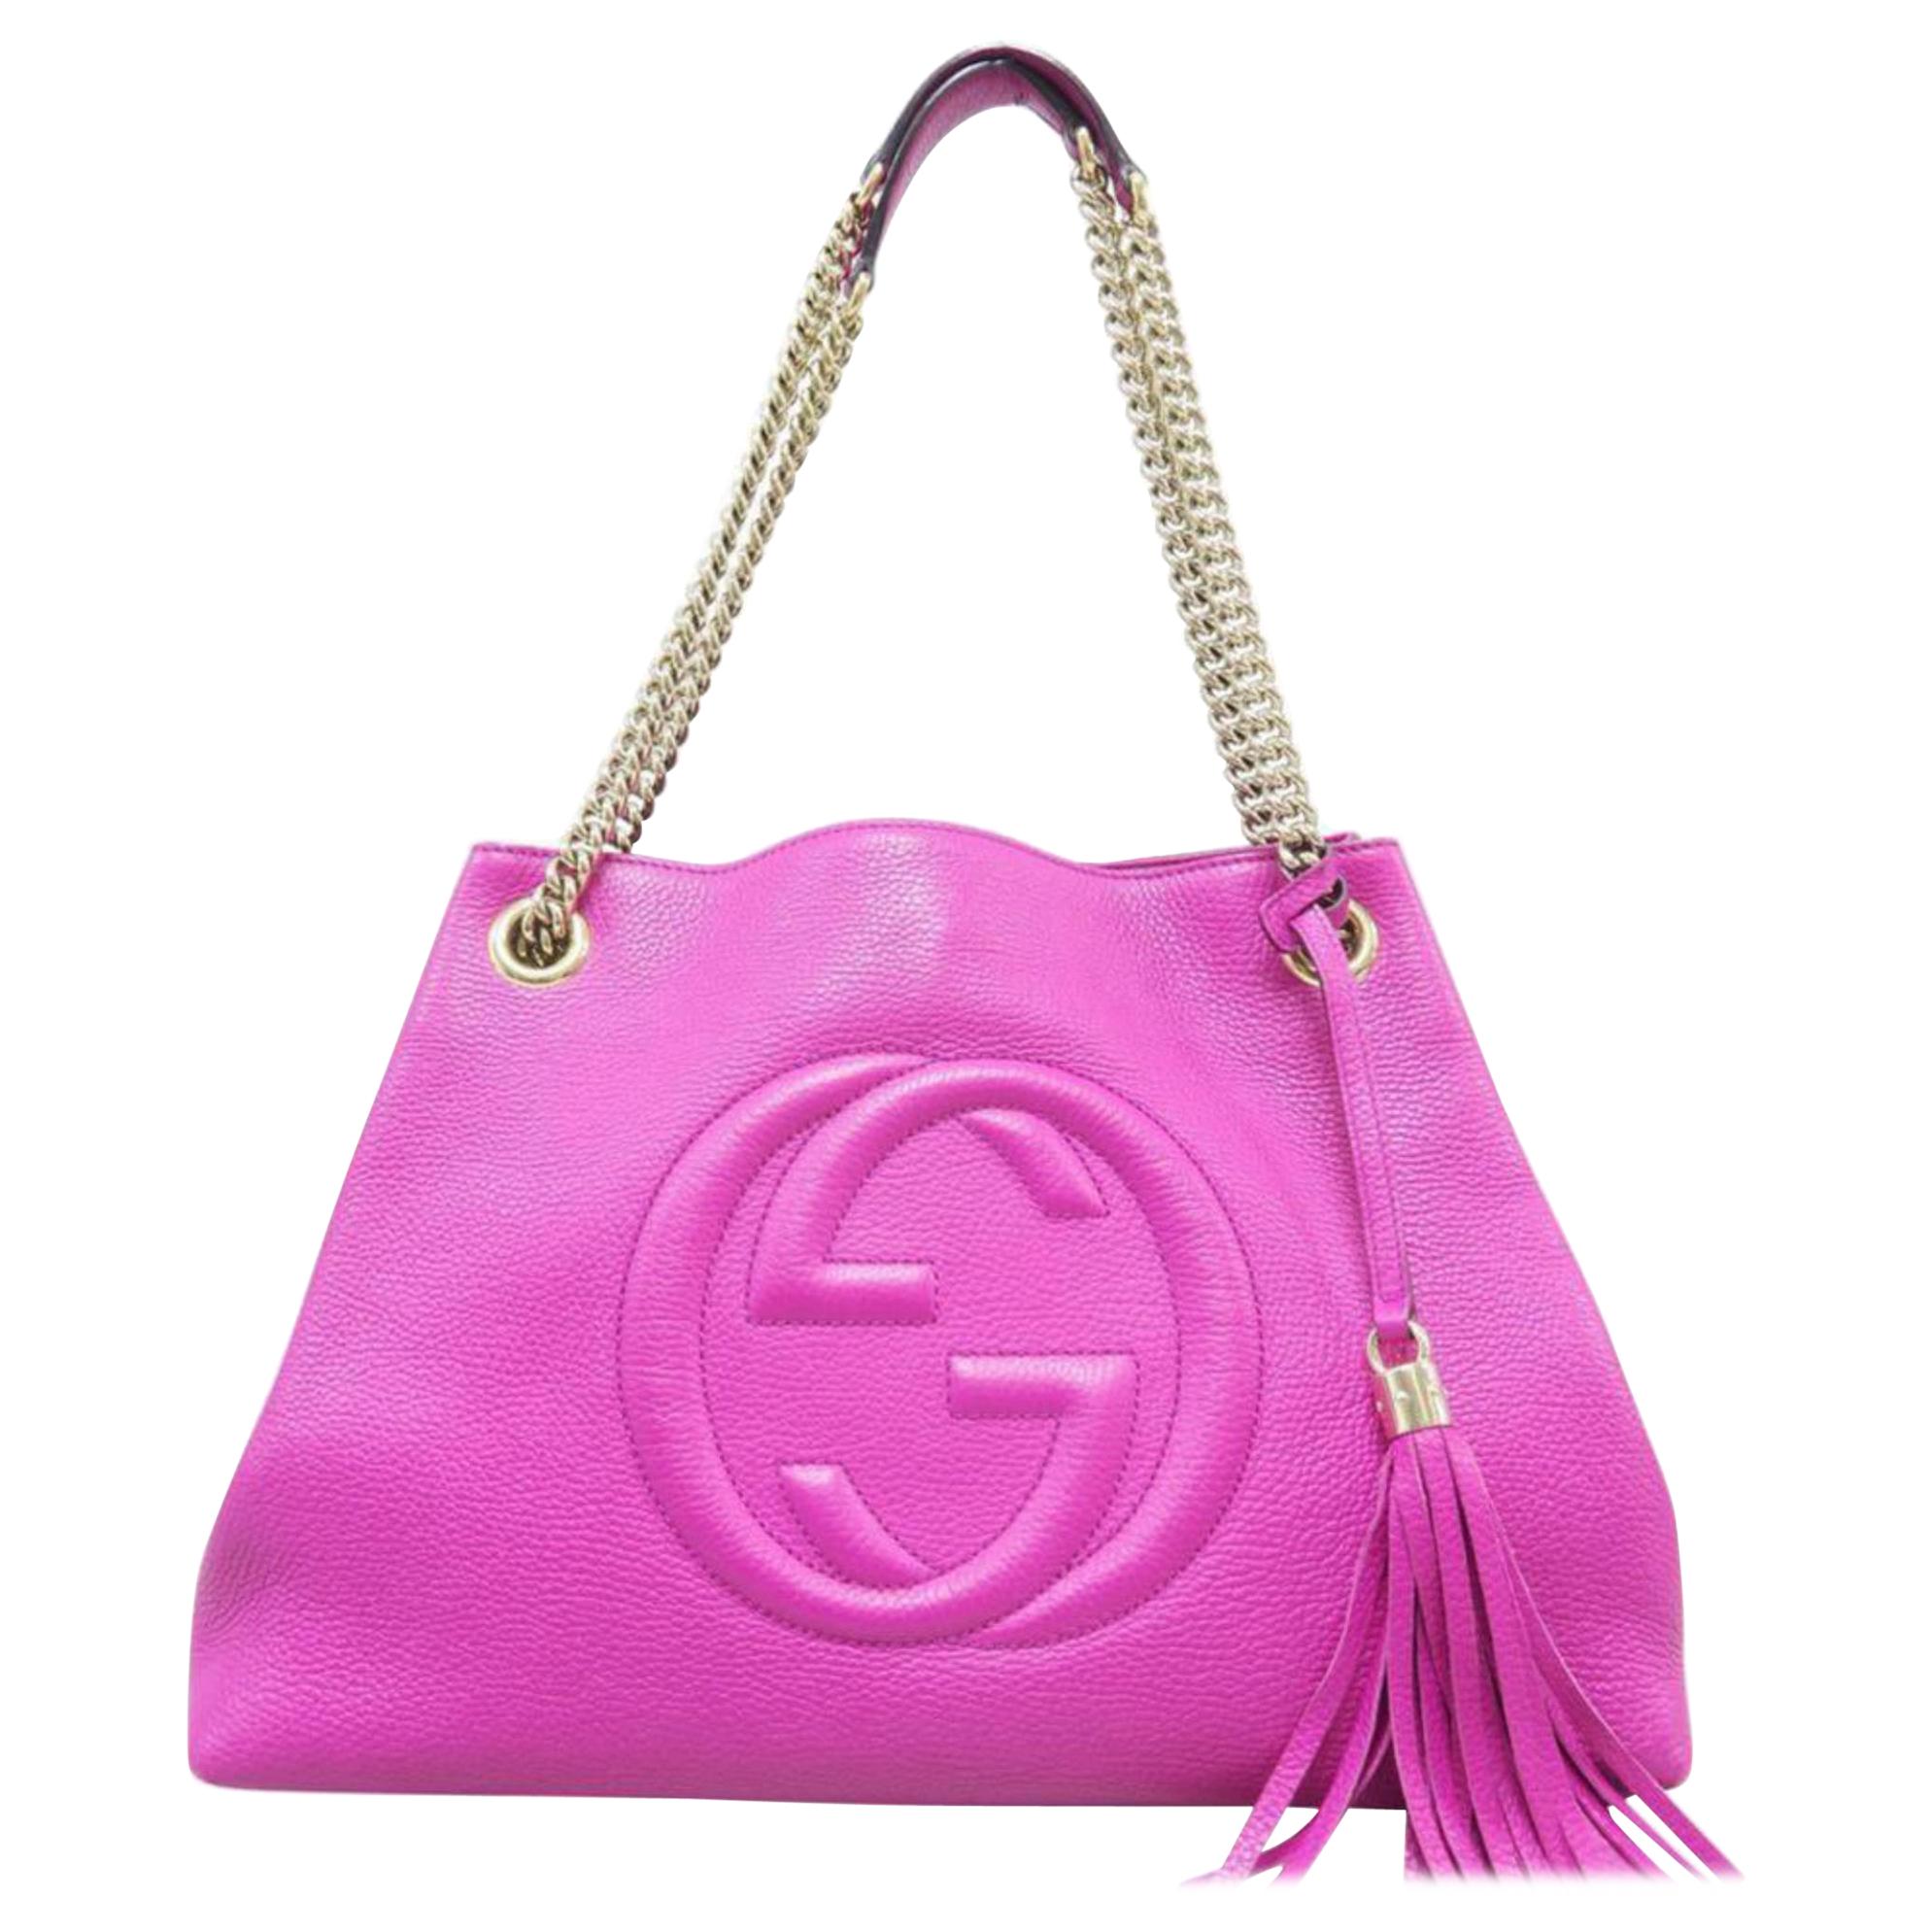 Gucci Soho Fringe Tassel Fuchsia Chain Tote 869084 Pink Leather Shoulder Bag